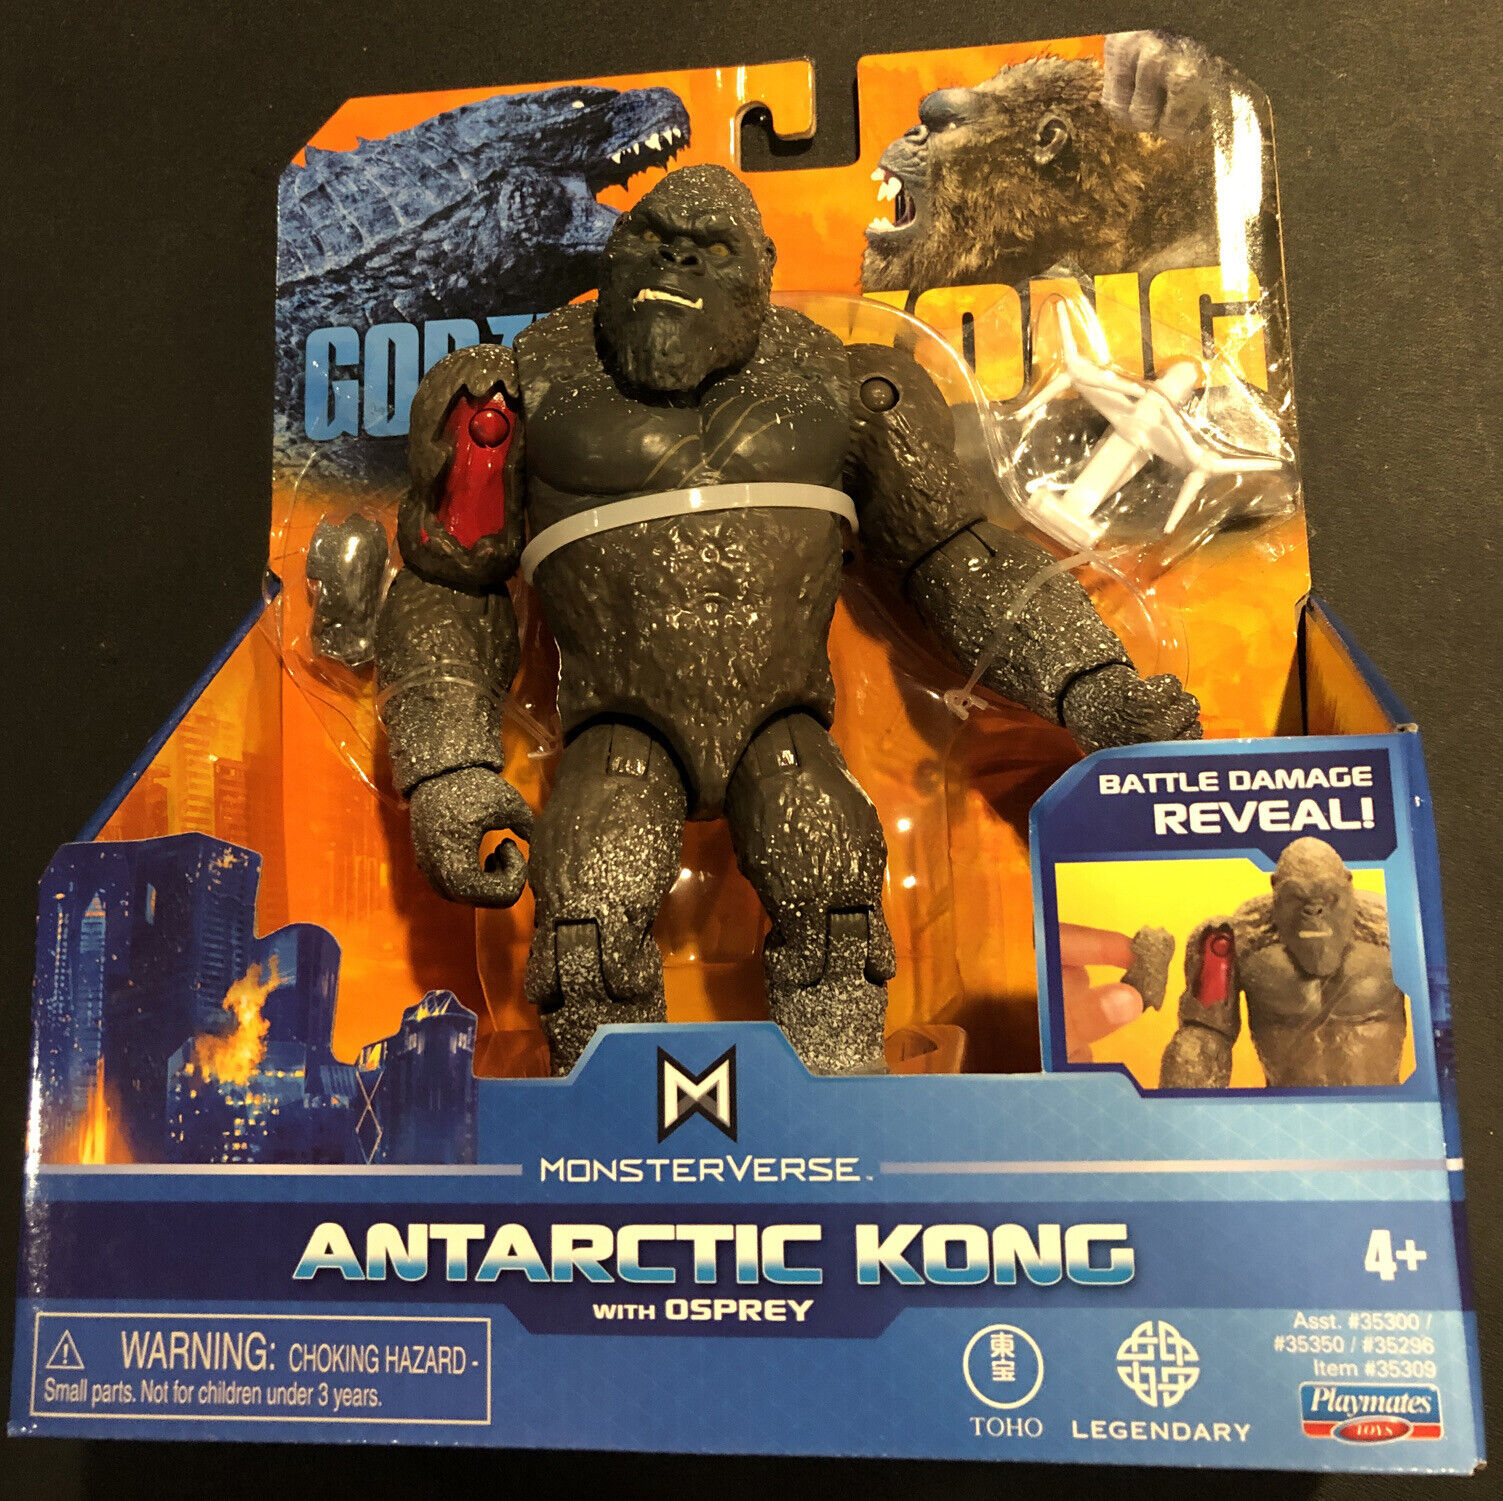 Godzilla vs Kong ANTARCTIC KONG w/ Osprey Playmates Monsterverse 6" Figure Toy